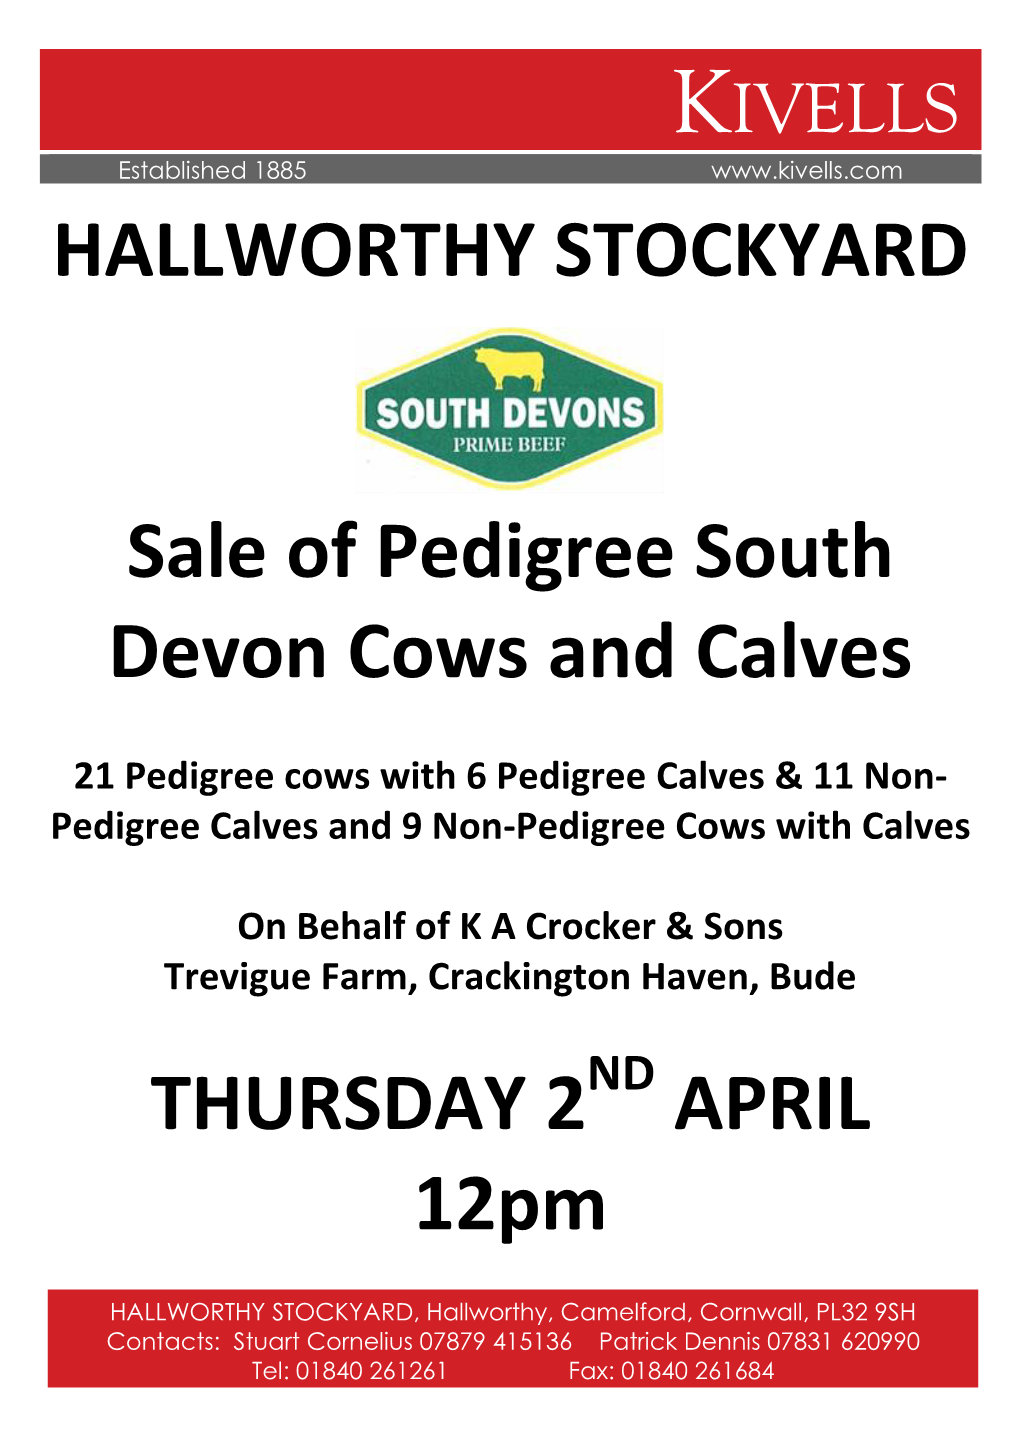 HALLWORTHY STOCKYARD Sale of Pedigree South Devon Cows And